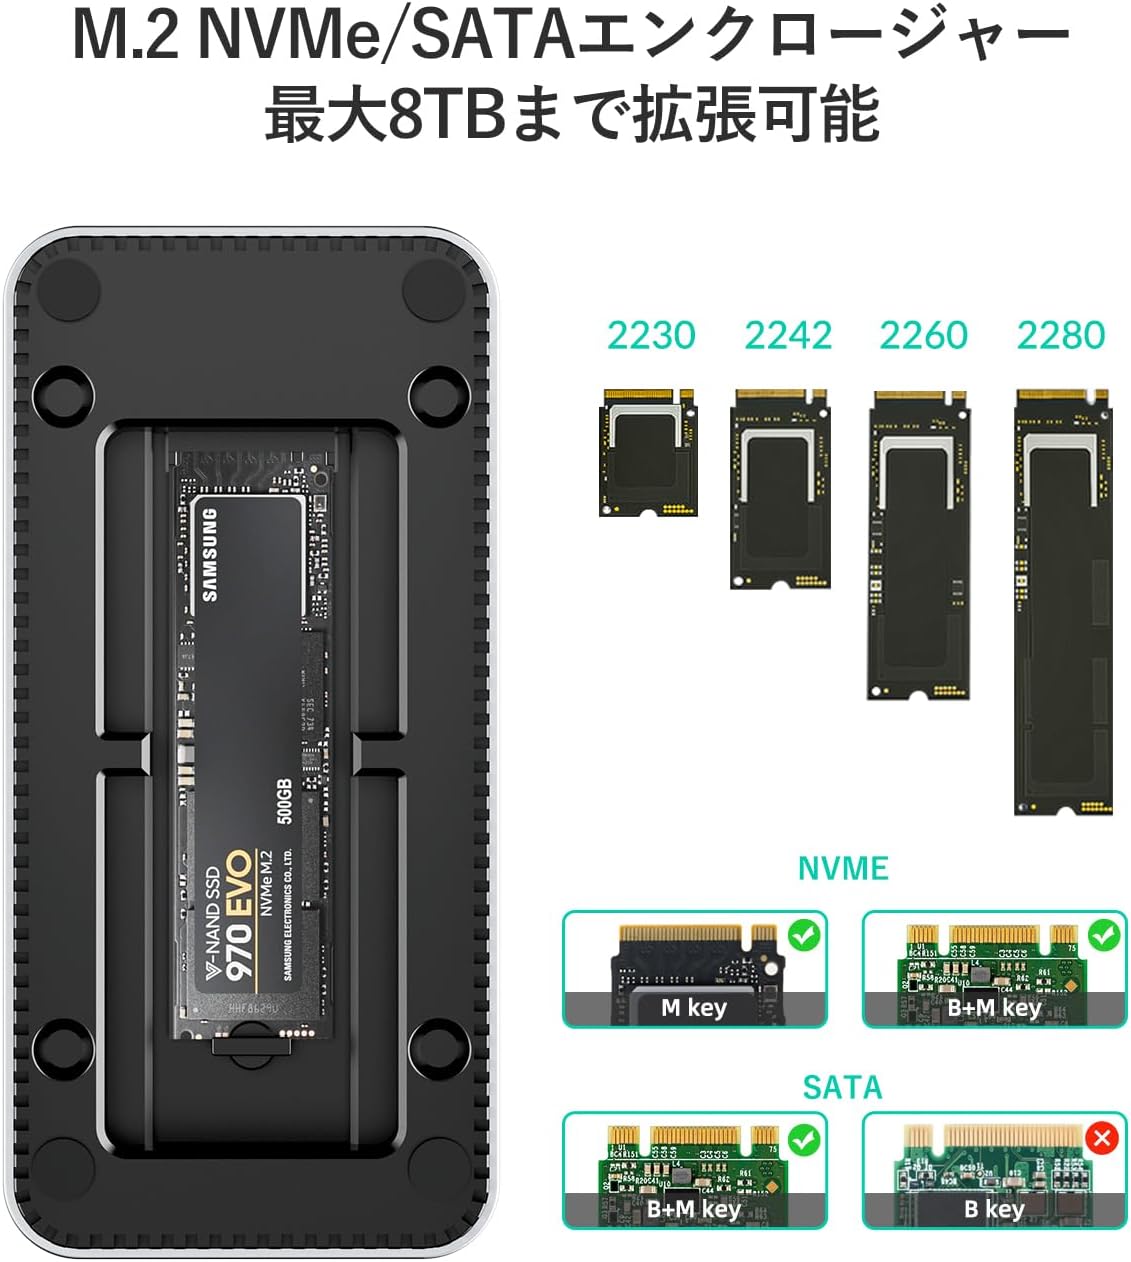 10-in-1 M.2 SSD 外付けケース 10Gbps USB 3.2 Gen2 M.2 NVMe SSDエンクロージャー付きUSB Cハブ ドッキングステーション 高速データ伝送 M.2 NVMe/SATA SSDリーダー 4K@60Hz HDMI  SD/TF PD 100W急速充電 Windows Mac OS用マルチポートドック (GAM2P9)